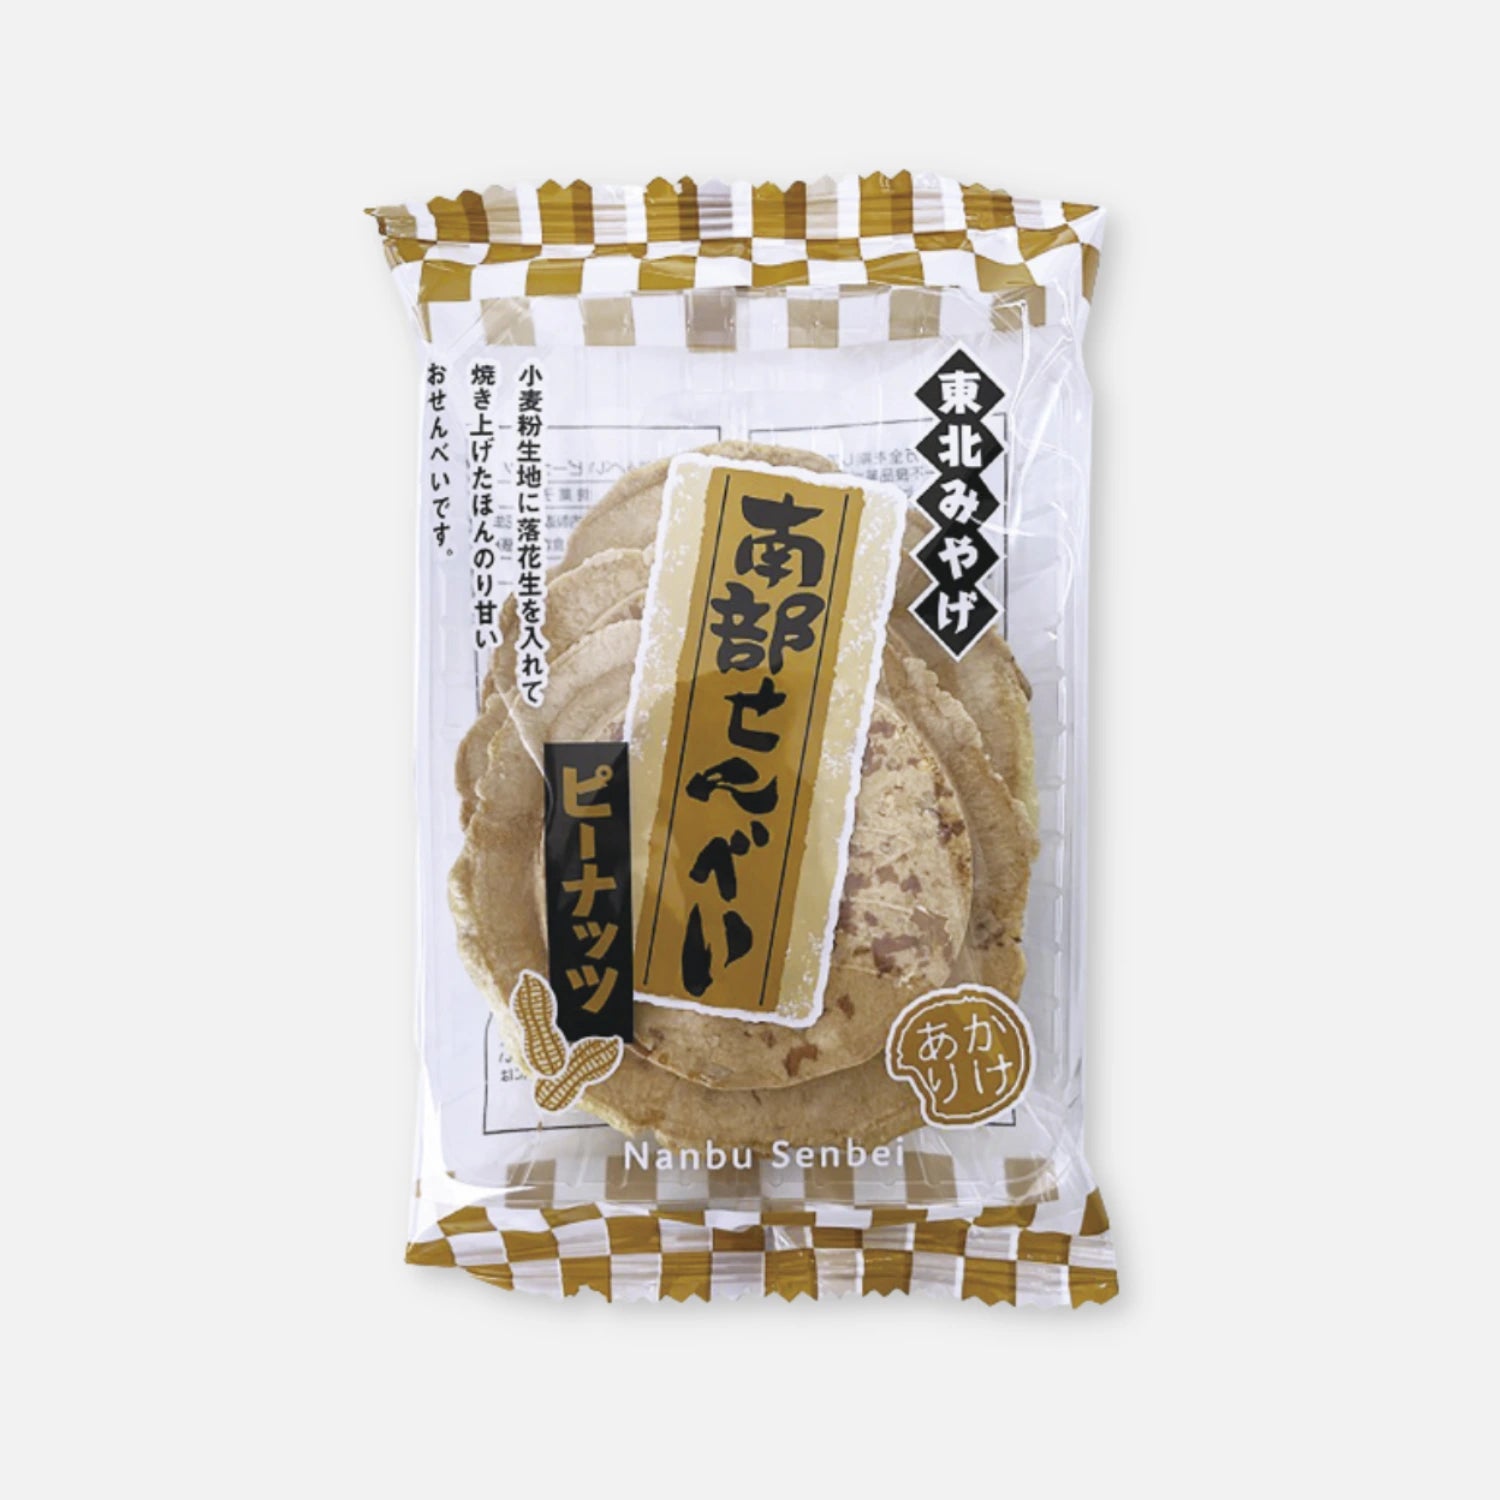 Tohoku Miyage Big Peanuts Senbei 3 Pieces - Buy Me Japan